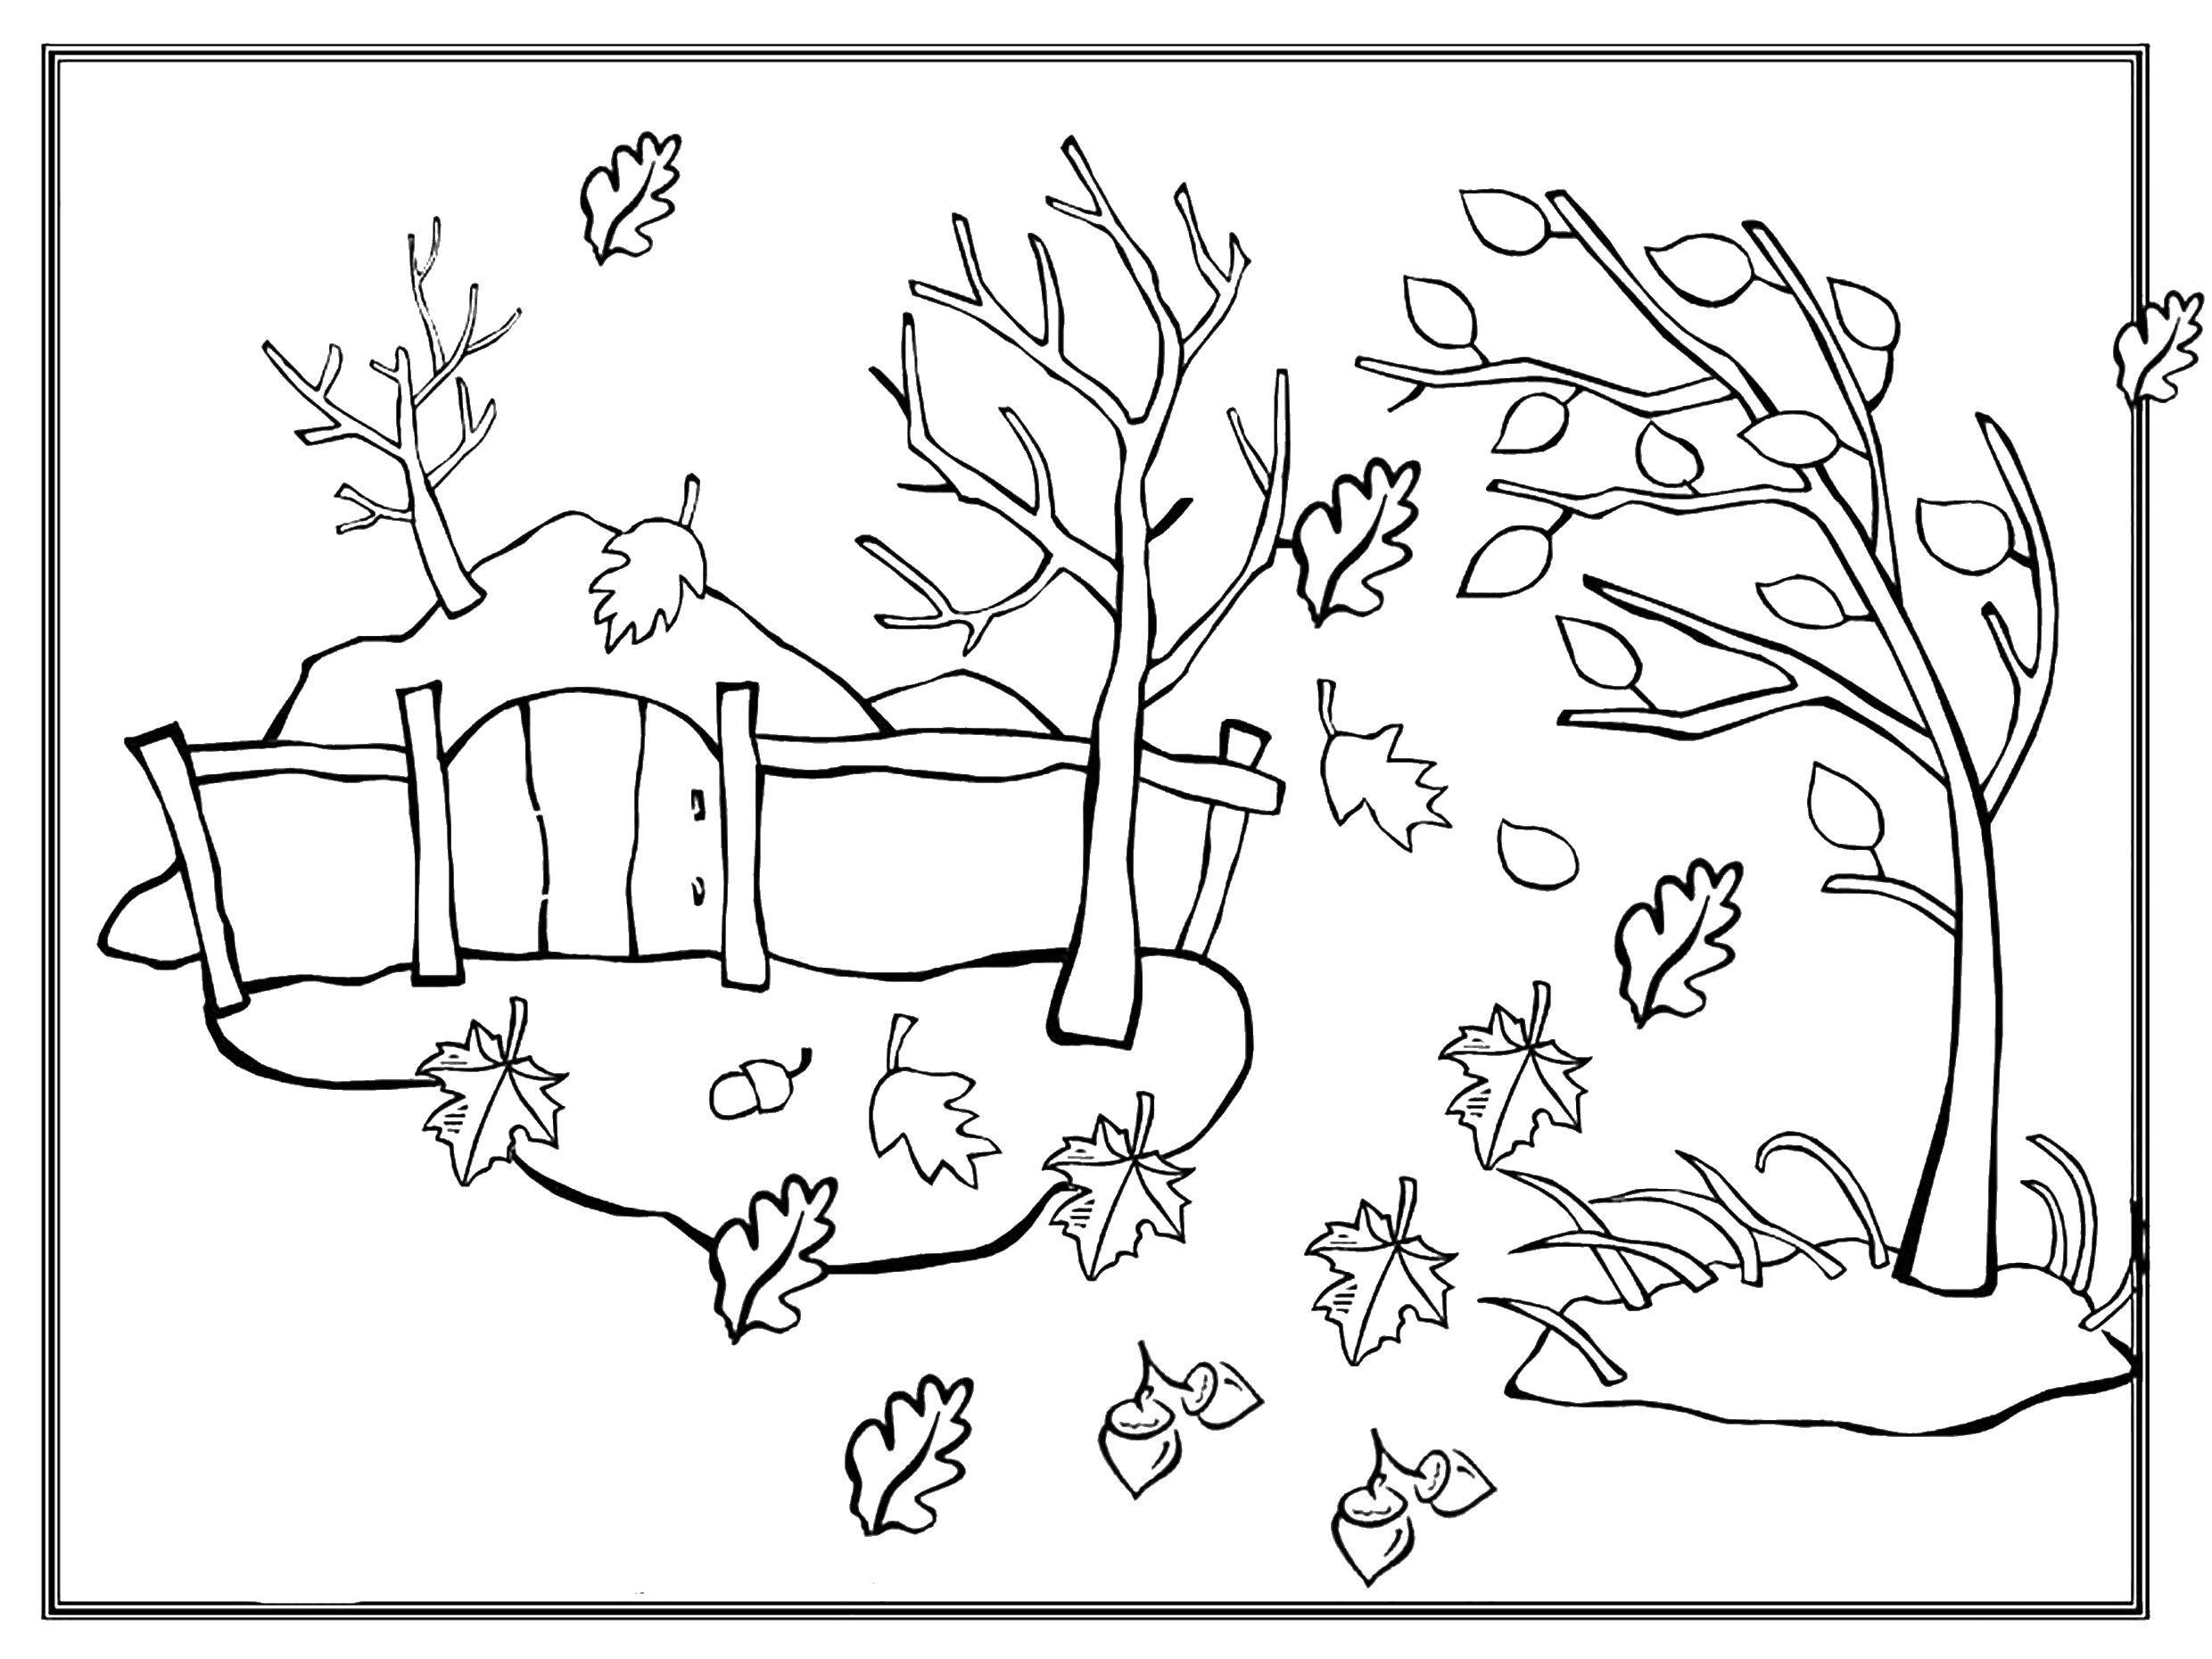 Листопад. Раскраски на тему листопад. Раскраски на тему осень. Листопад. Раскраски для детей на тему листопад. Раскраски листопад. Раскраски на тему окружающий мир, осень, раскраски с листьями. Скачать раскраски листопад.   